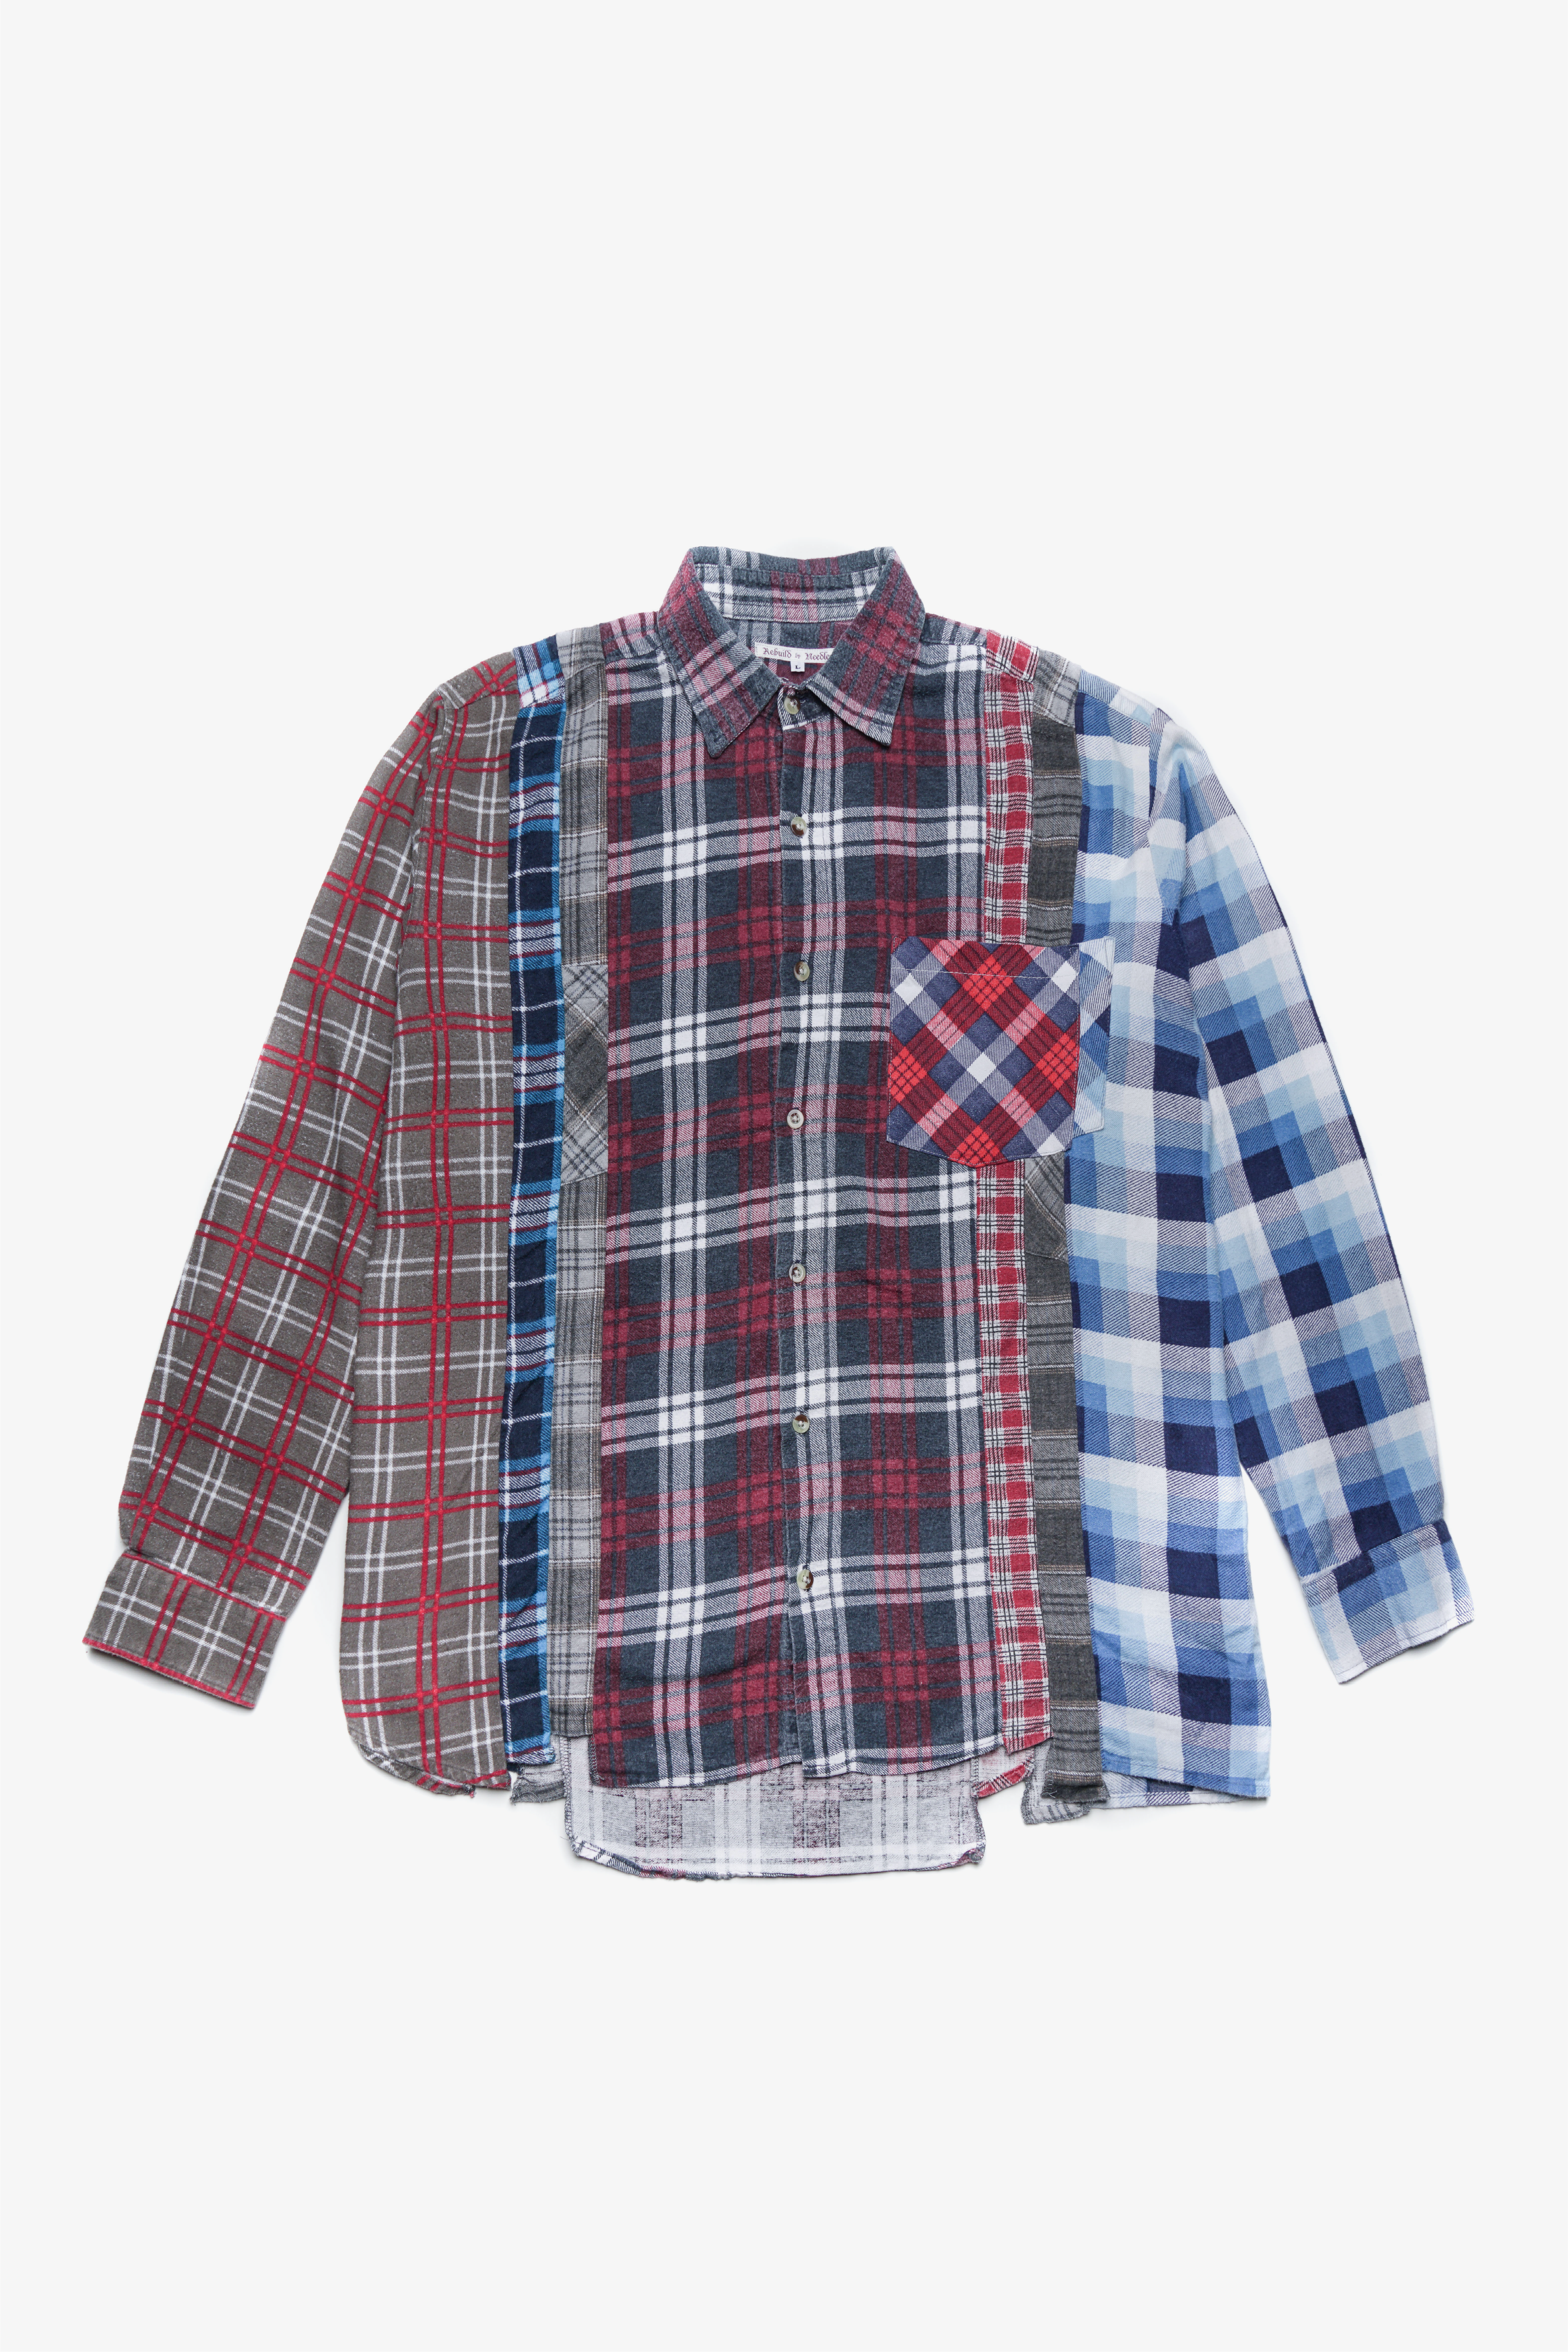 Selectshop FRAME - NEEDLES 7 Cuts Flannel Shirt Shirts Dubai